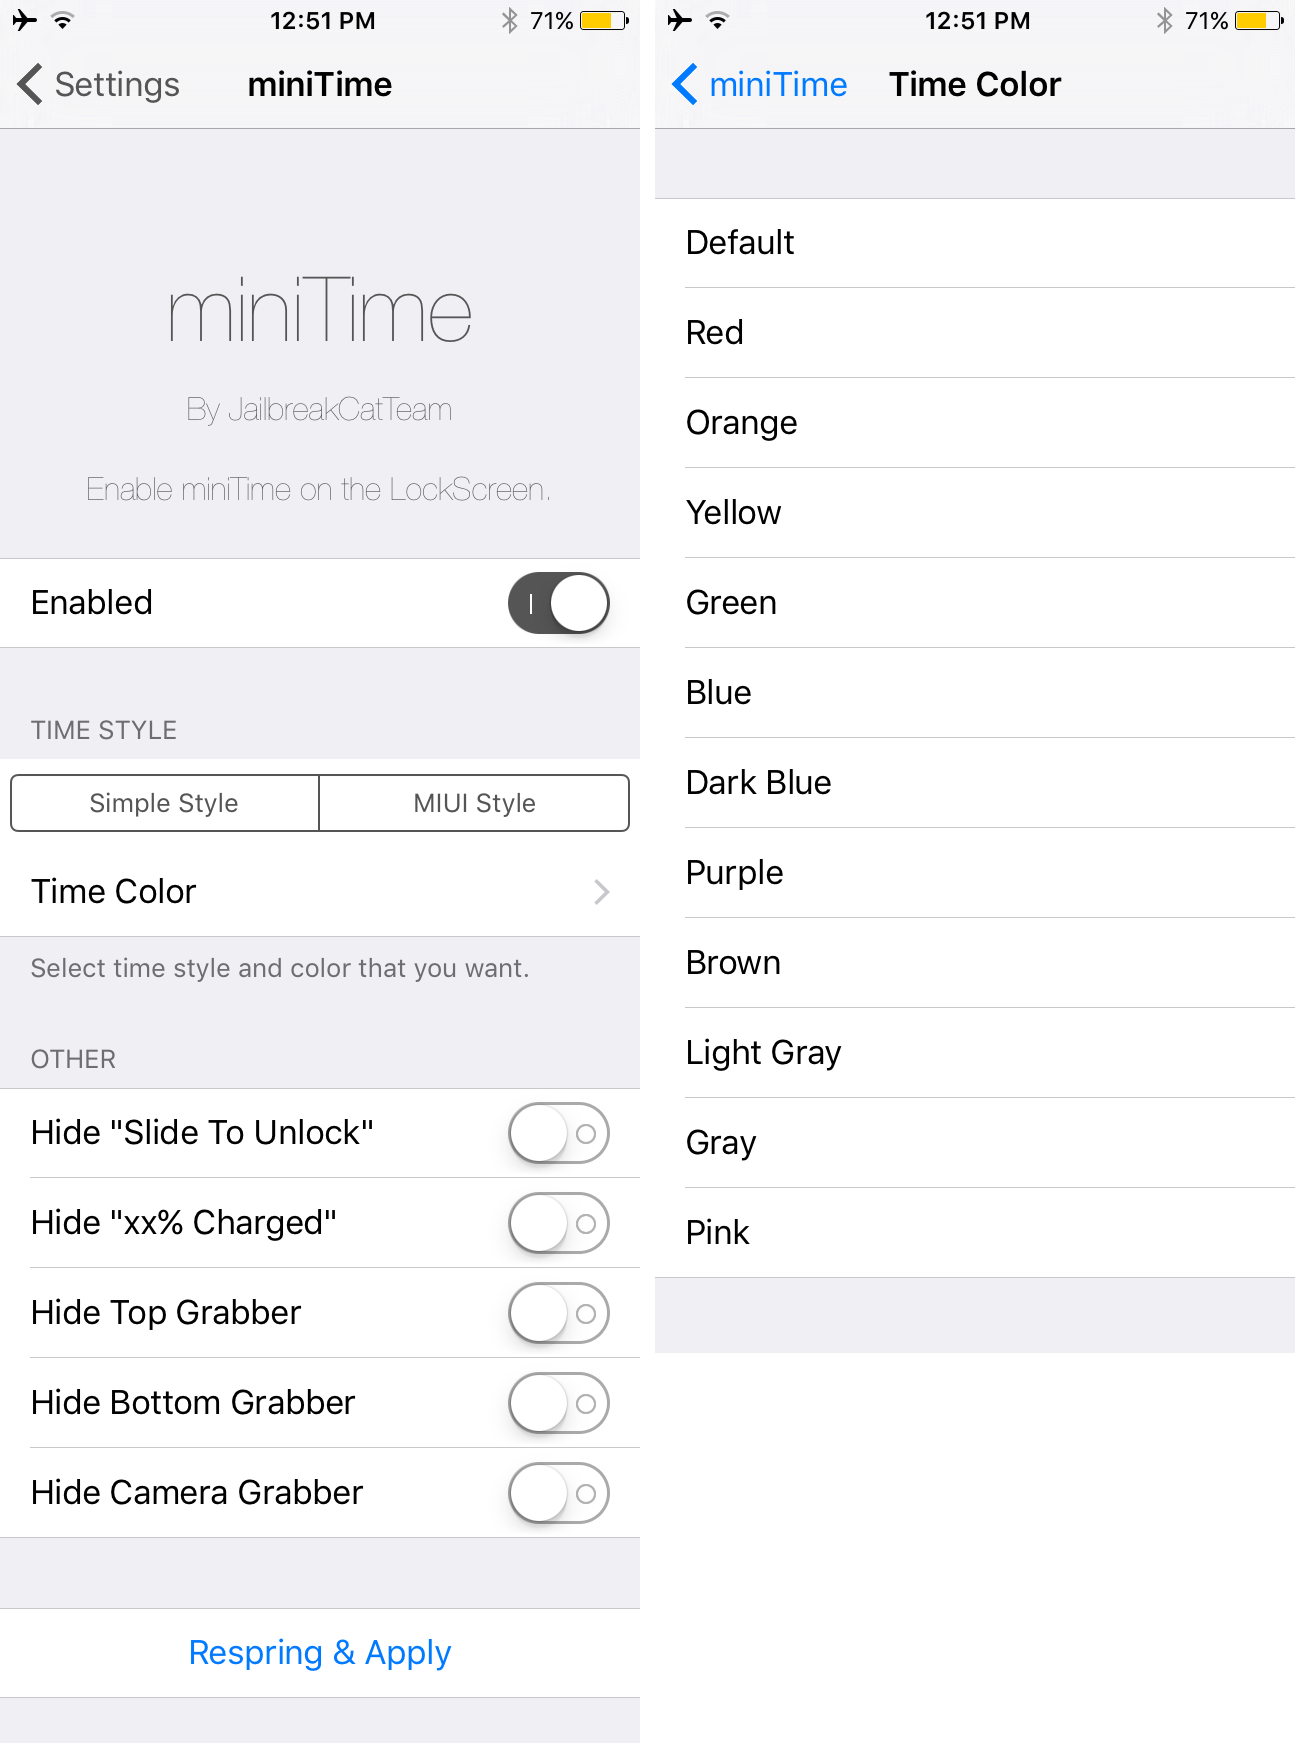 miniTime preferences pane options to configure